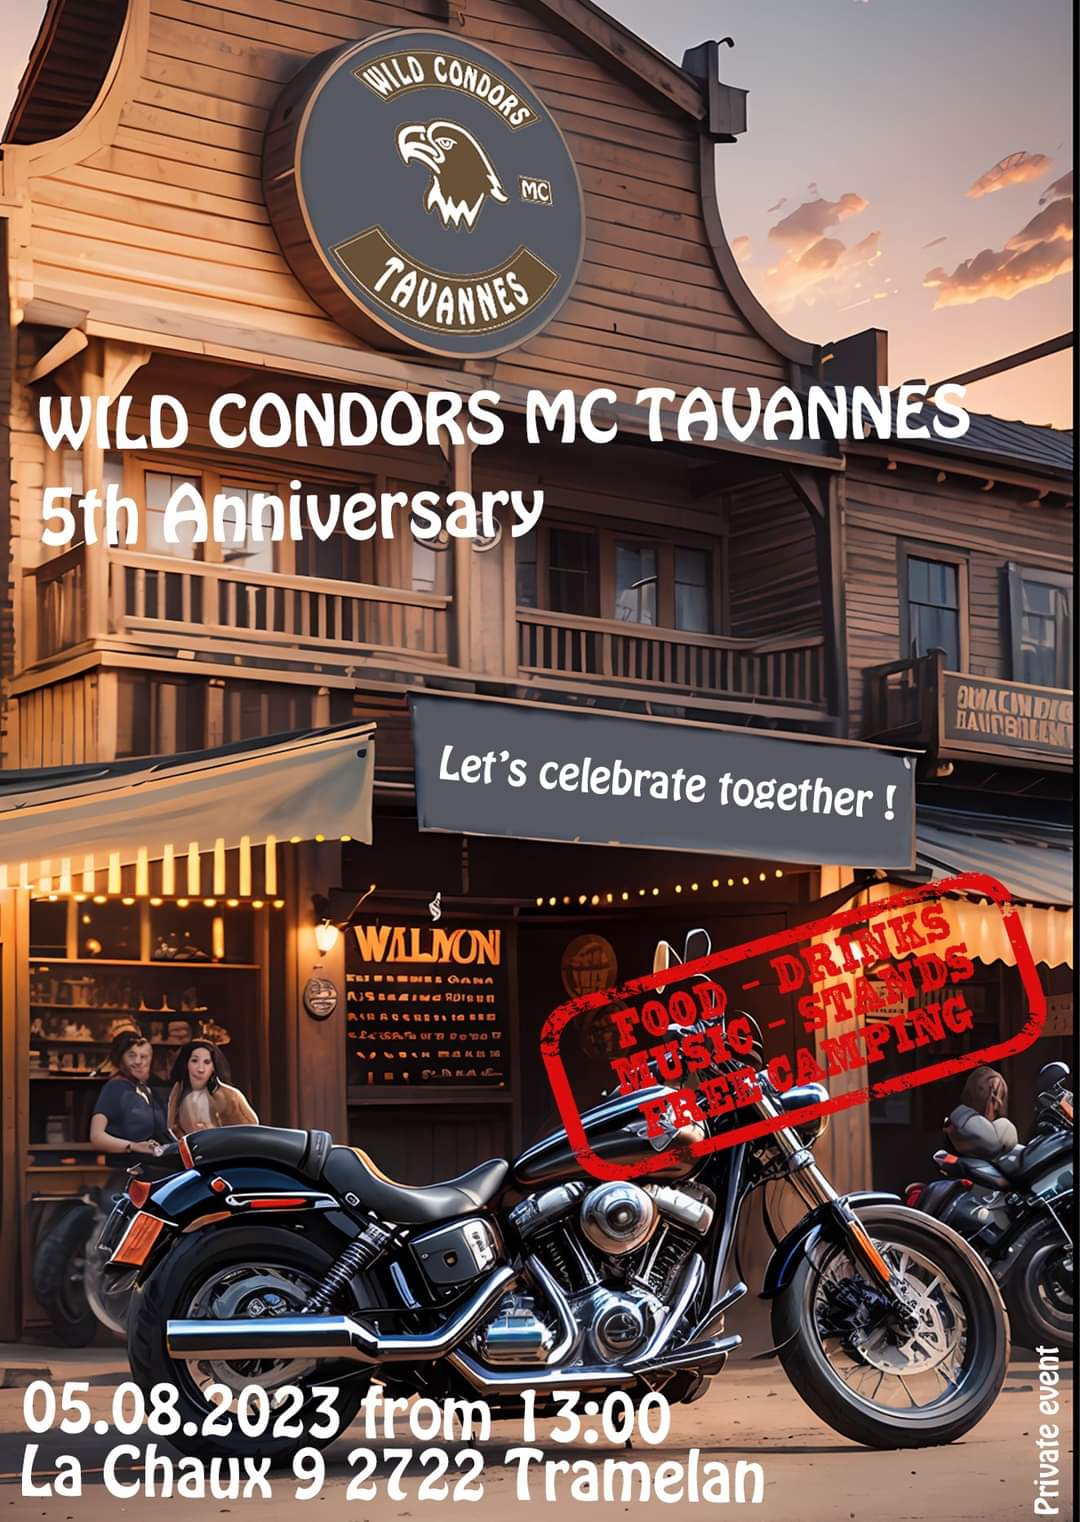 5th Anniversary of Wild Condors MC